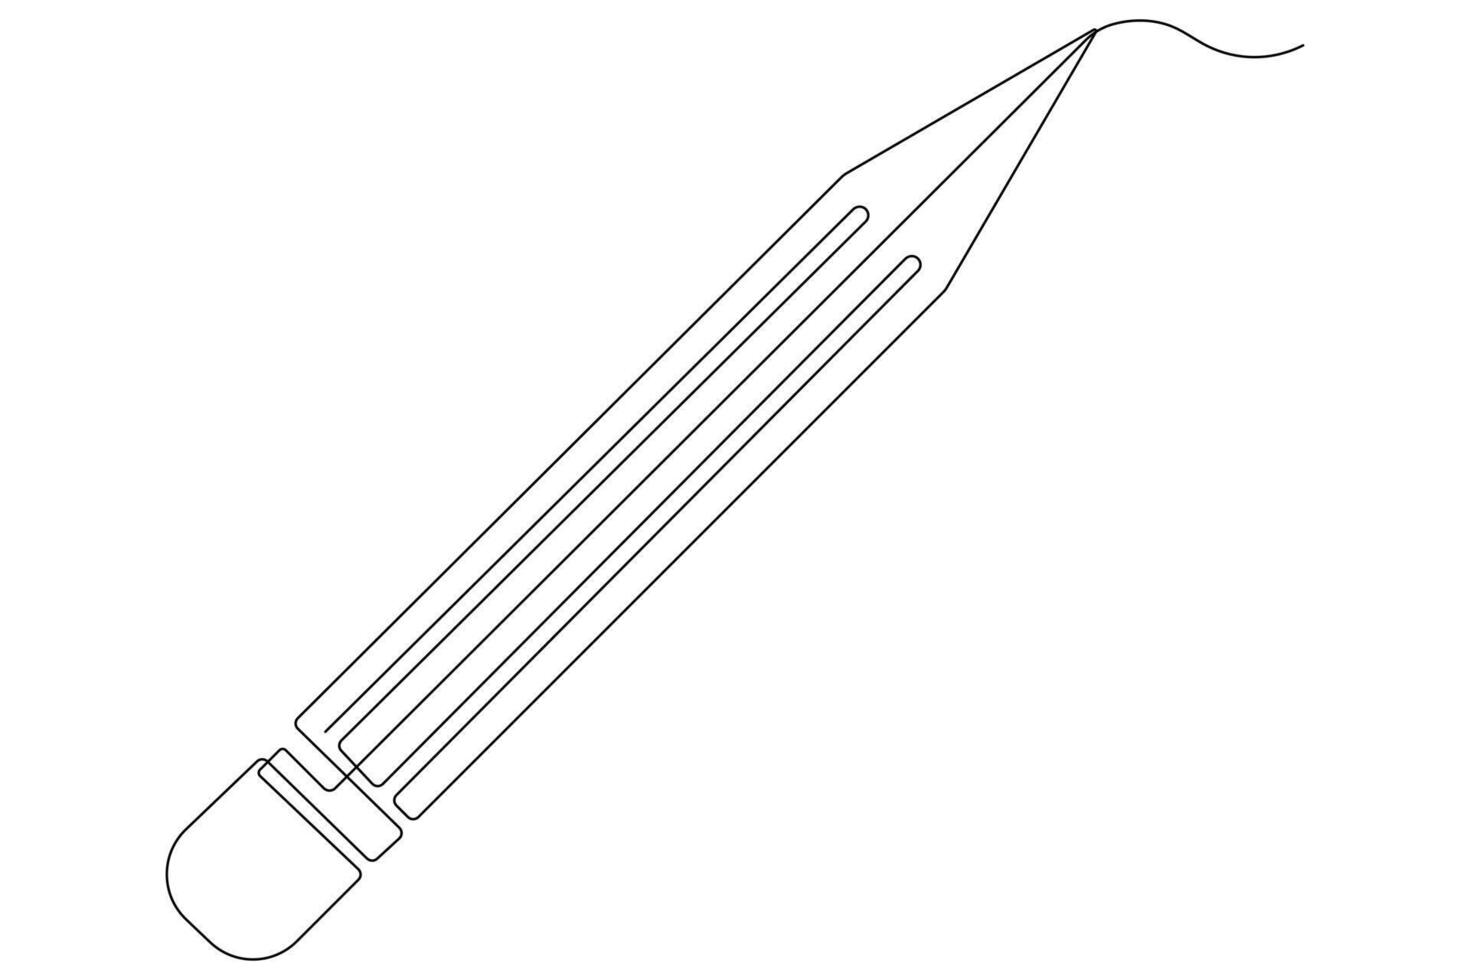 Continuous one line art simple pencil sketch outline vector illustration